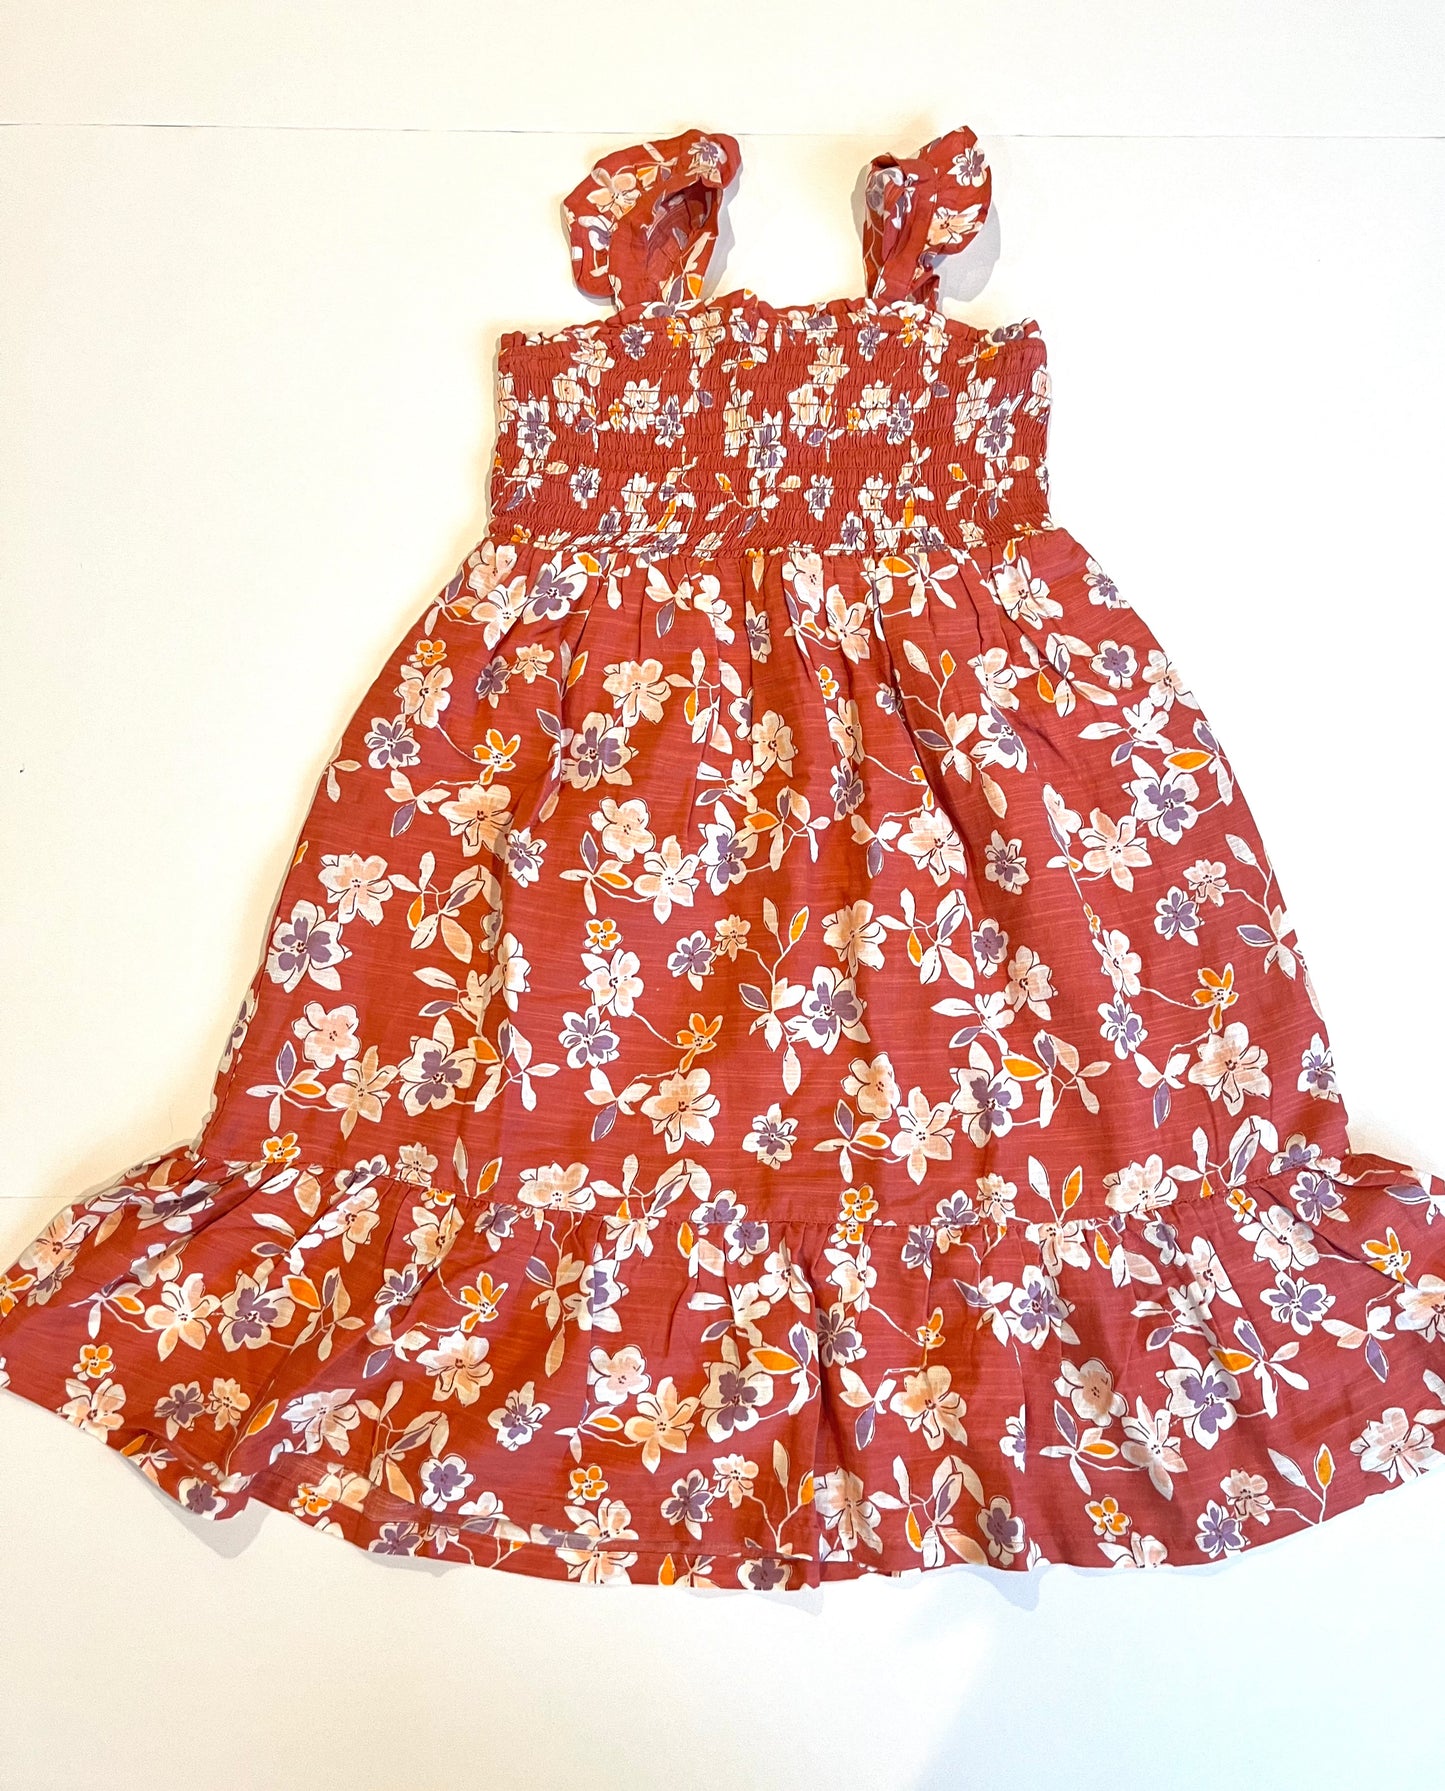 Girls s 6-7 Gap floral dress